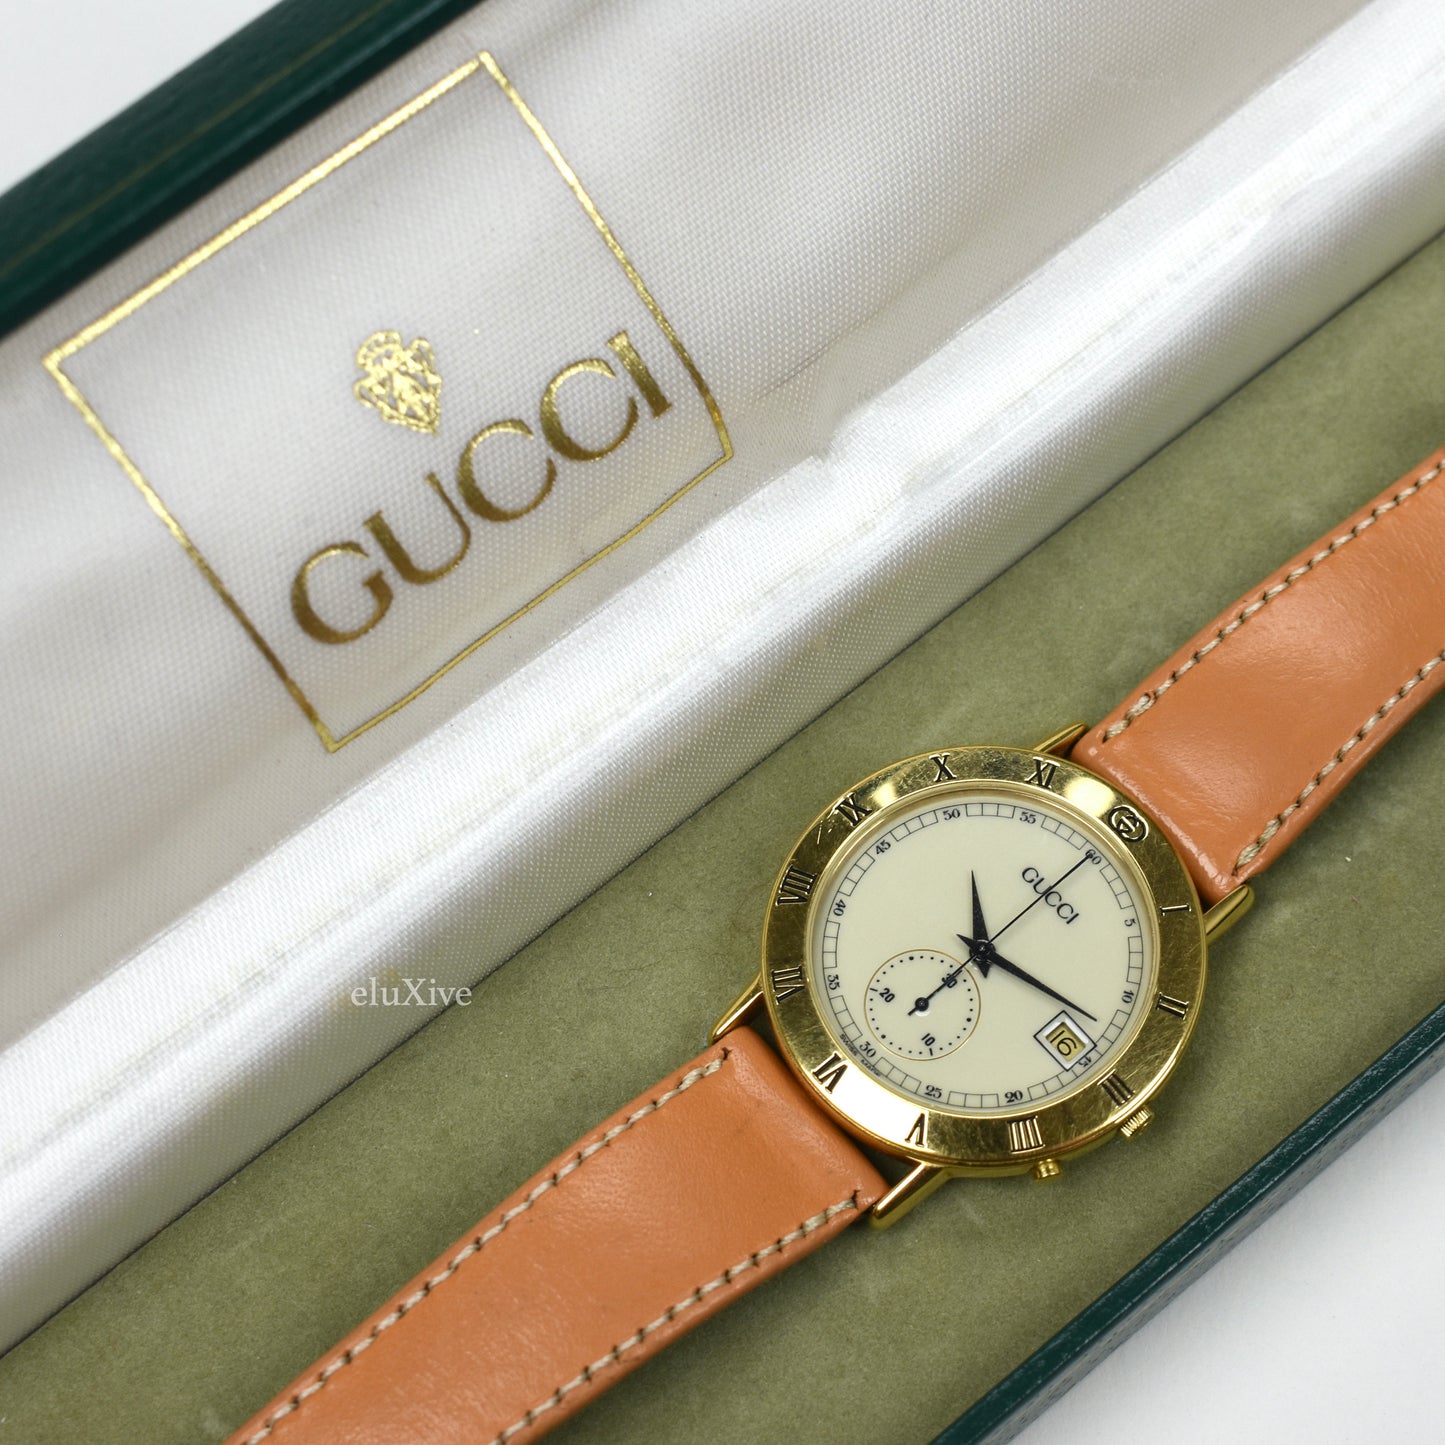 Gucci - 3800M Gold Cream Dial Chronograph Watch